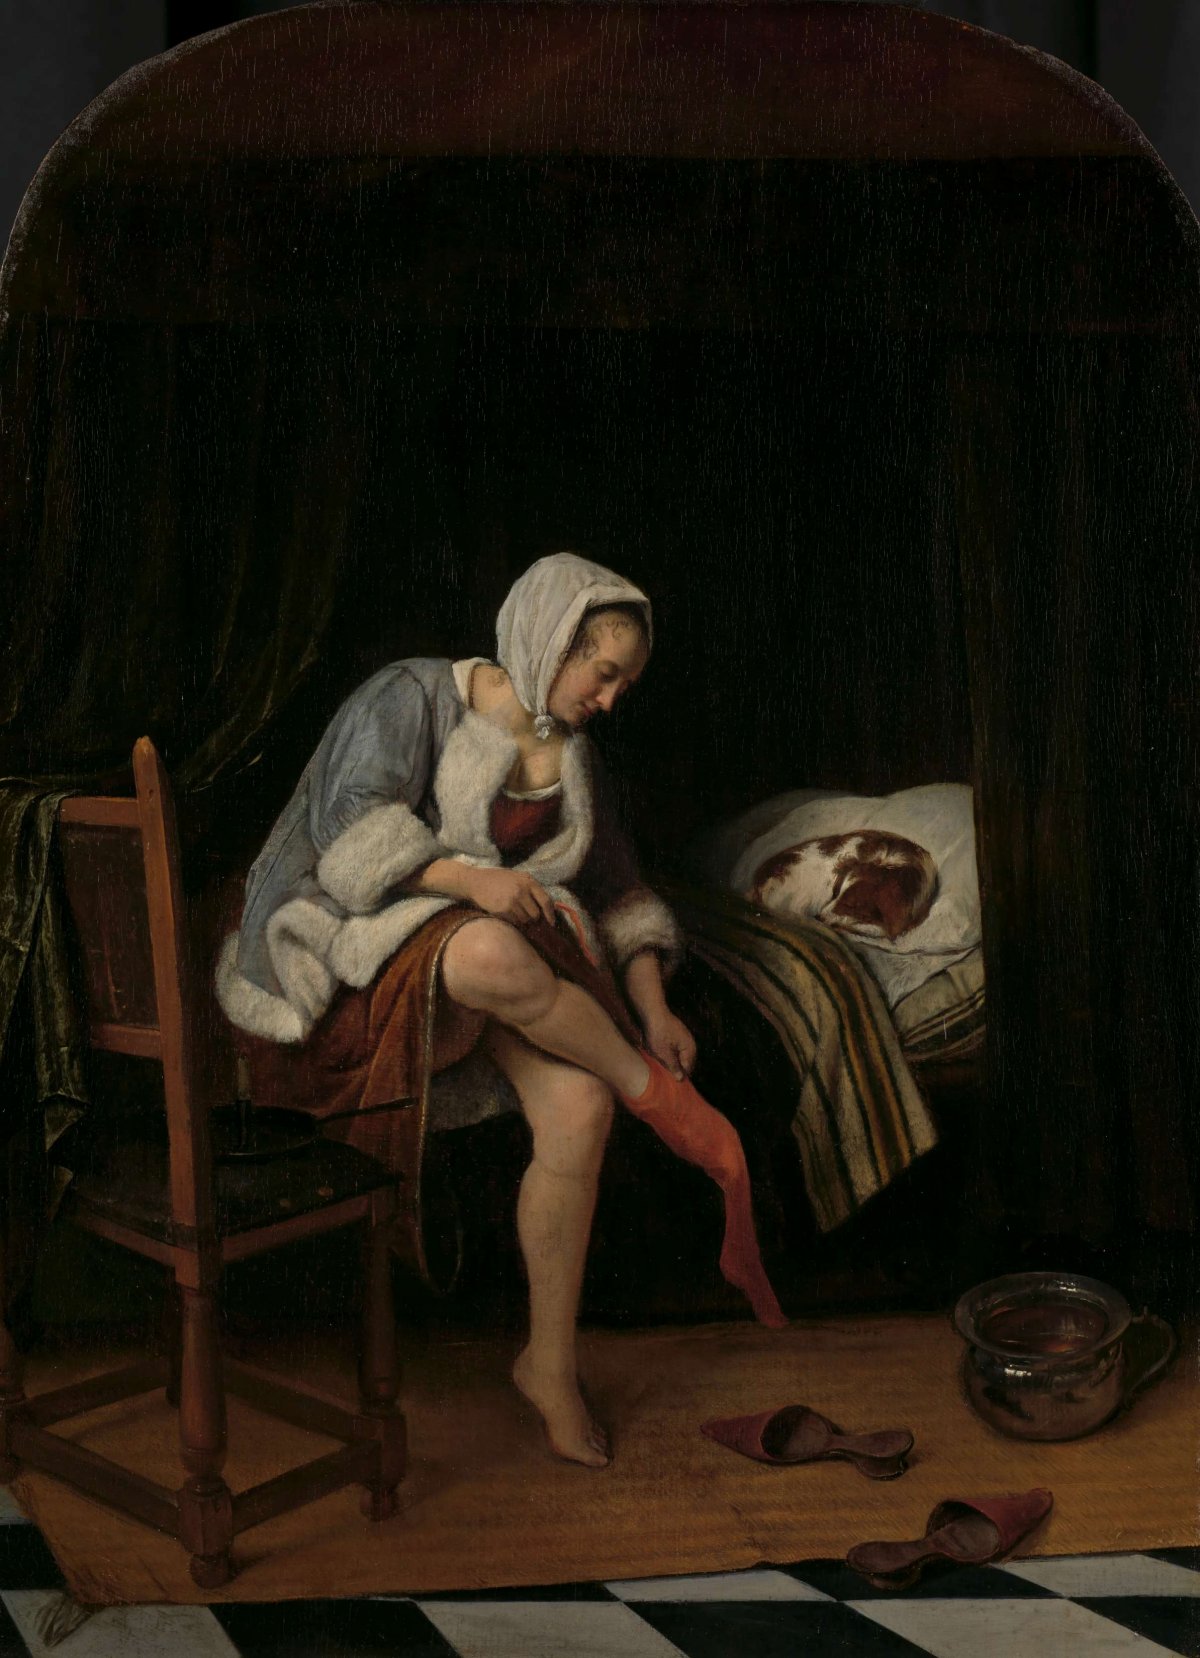 Woman at her Toilet, Jan Havicksz. Steen, 1655 - 1660